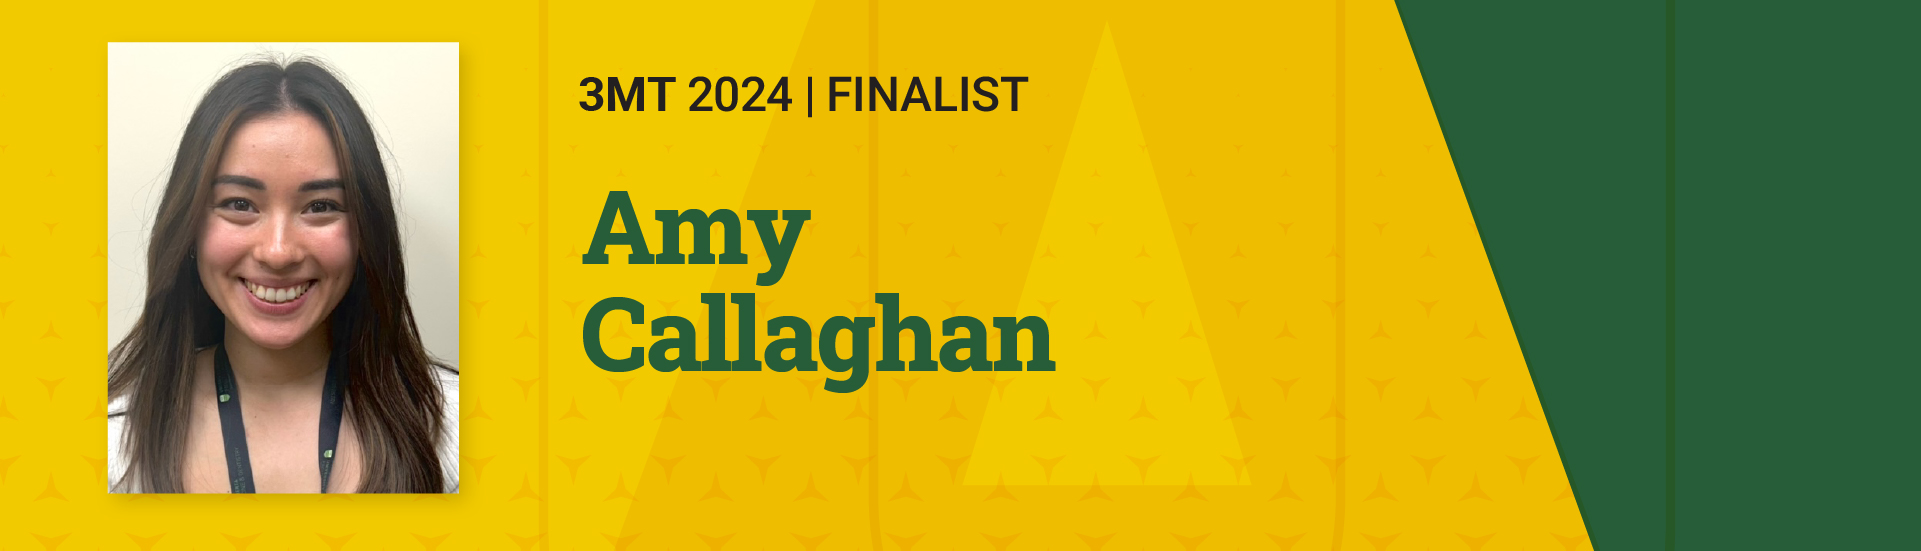 3MT 2024 Finalist Amy Callaghan